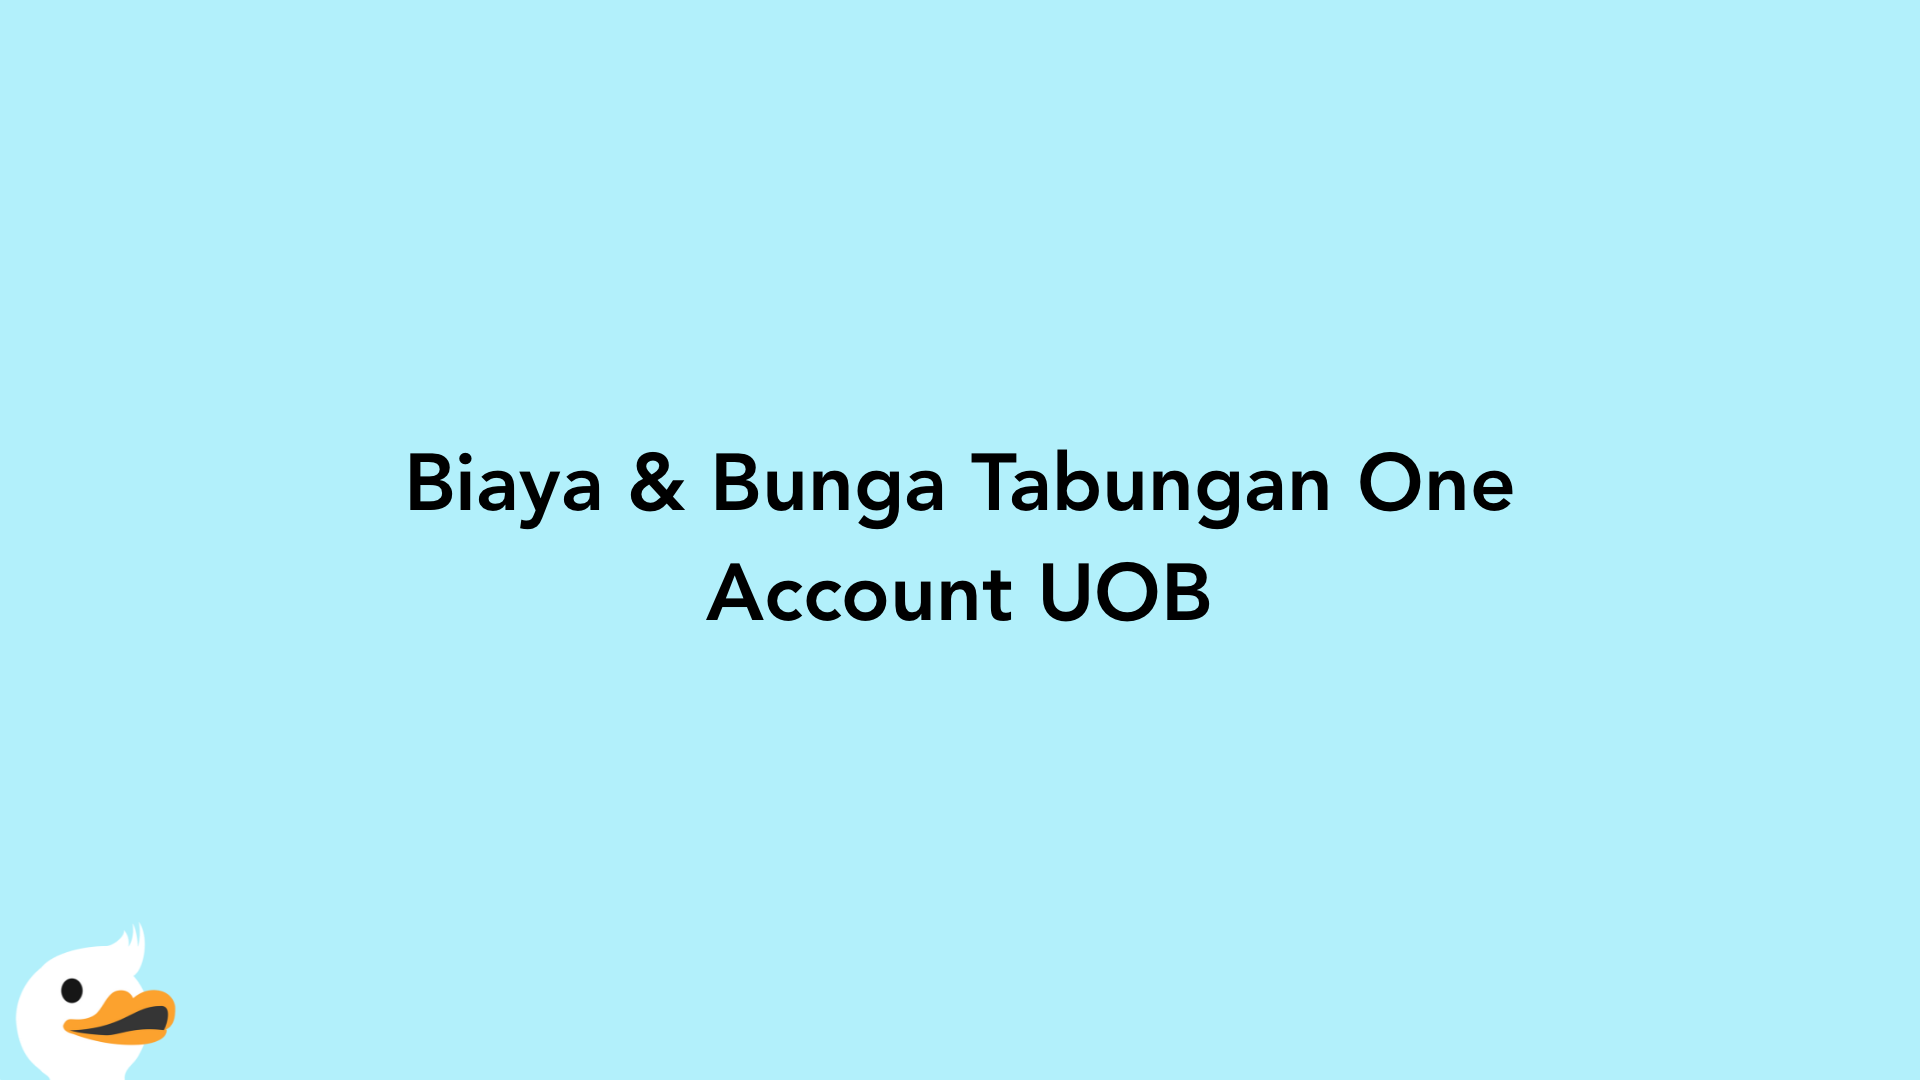 Biaya & Bunga Tabungan One Account UOB